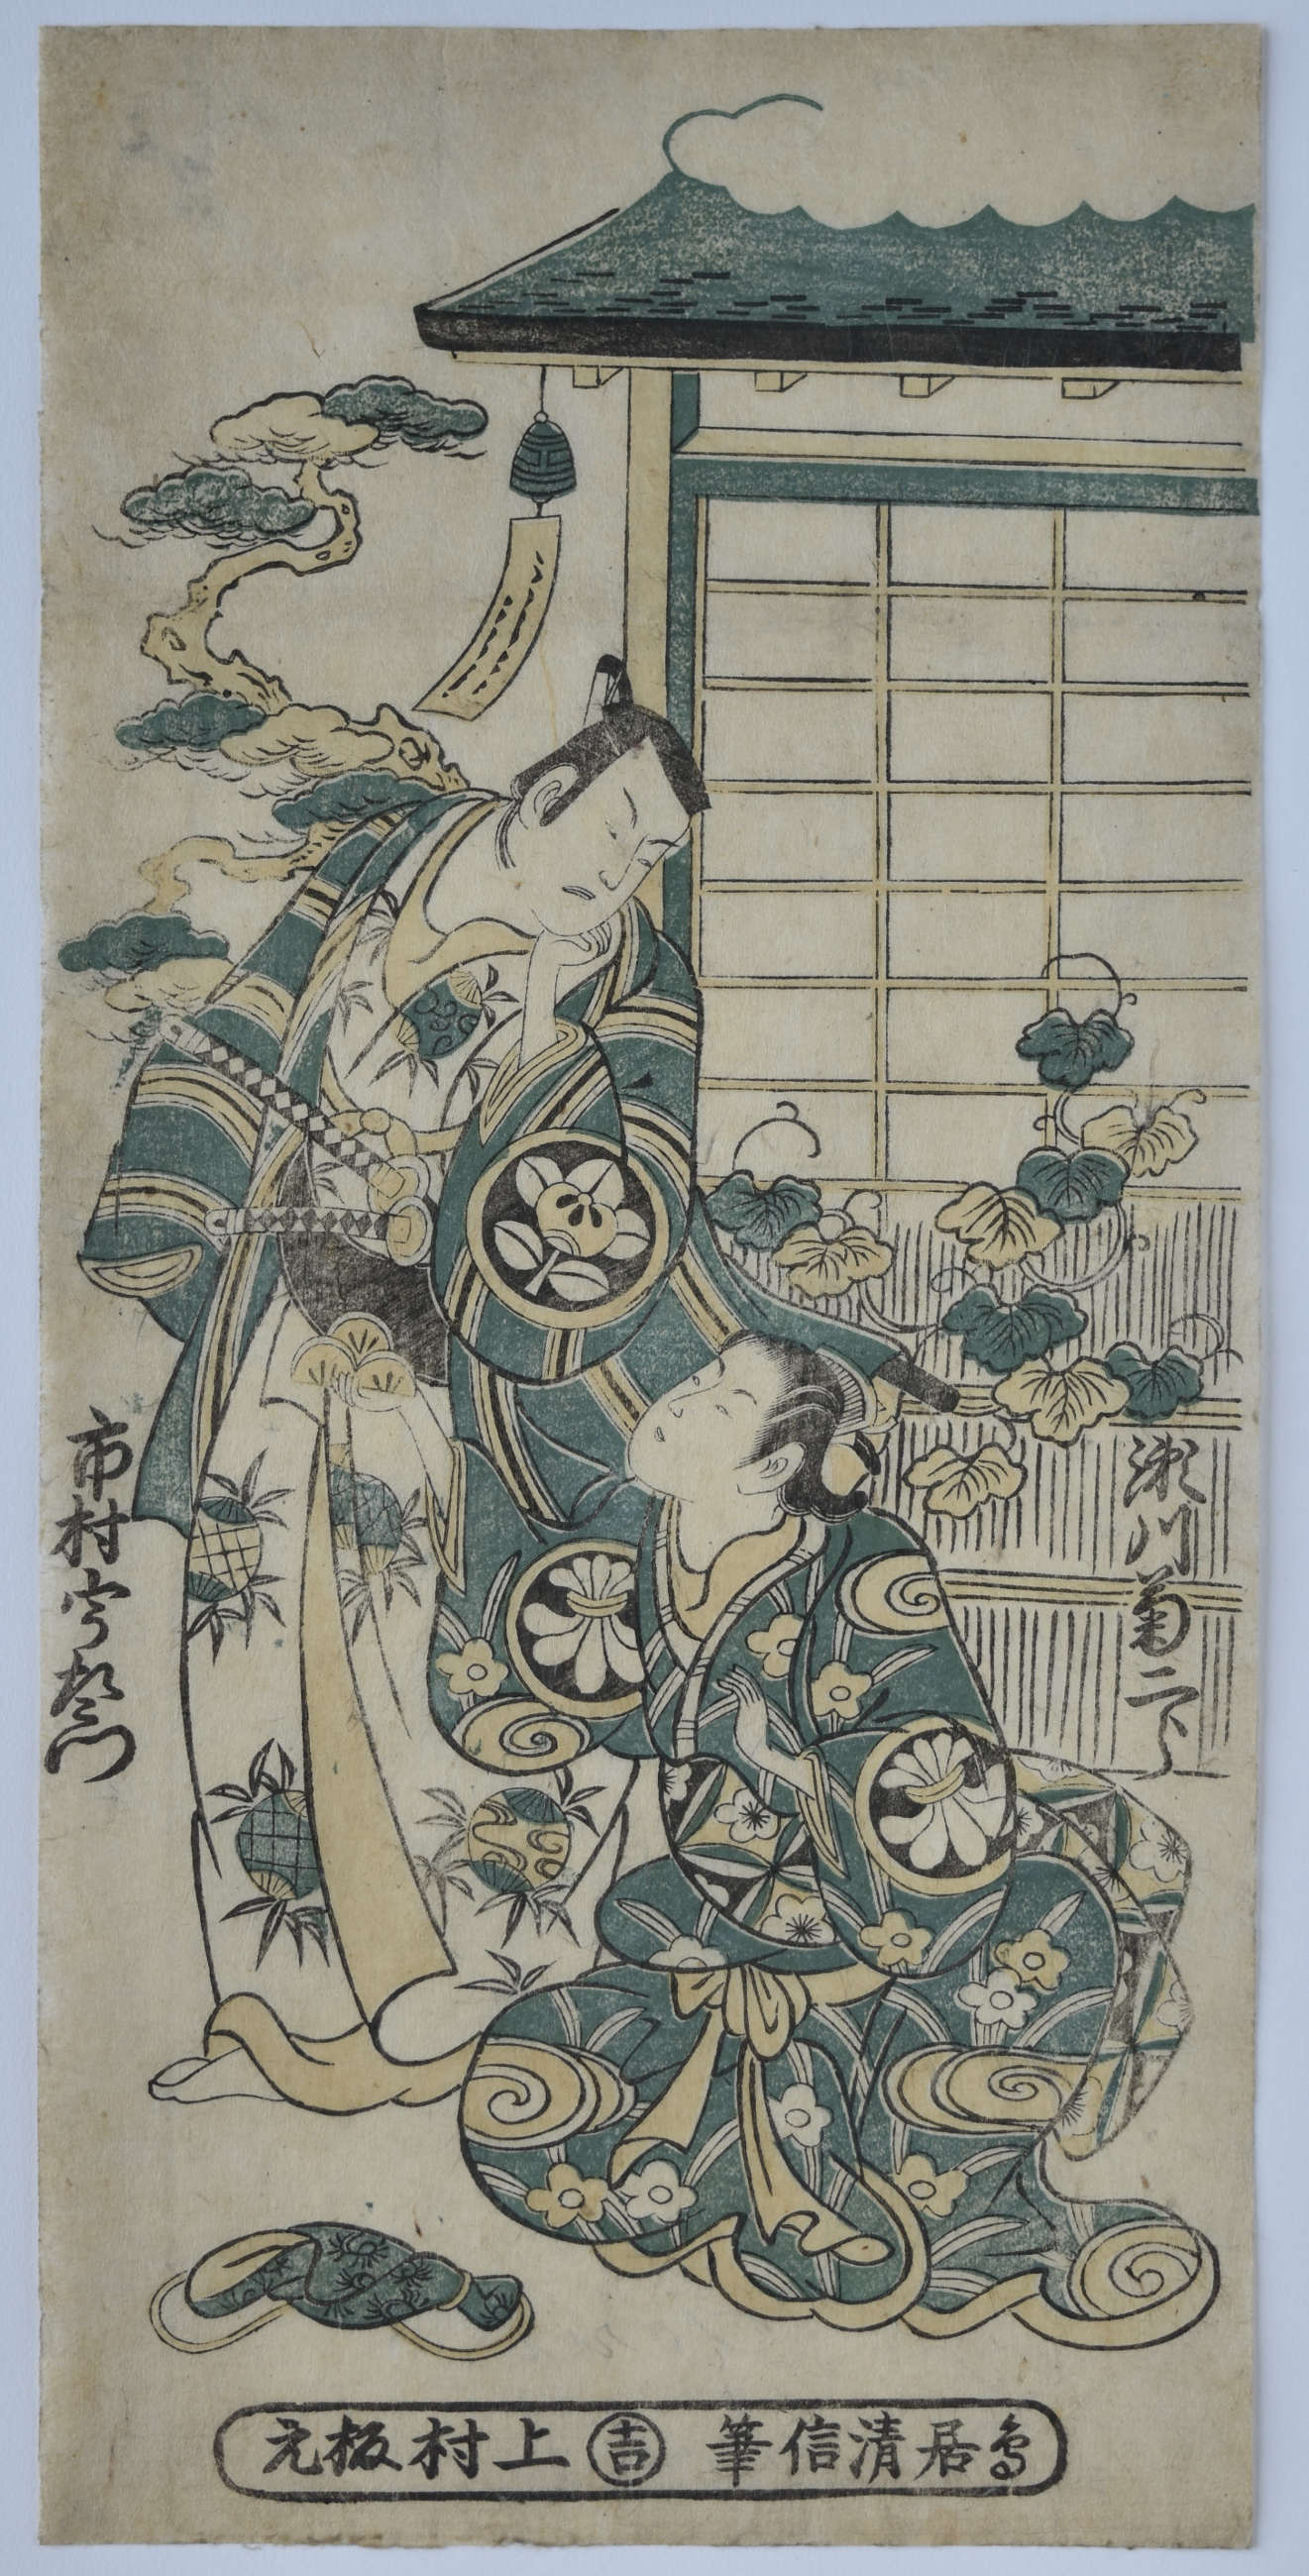 Repro Japanese  Print by Torii Kiyonobu II ref #130 